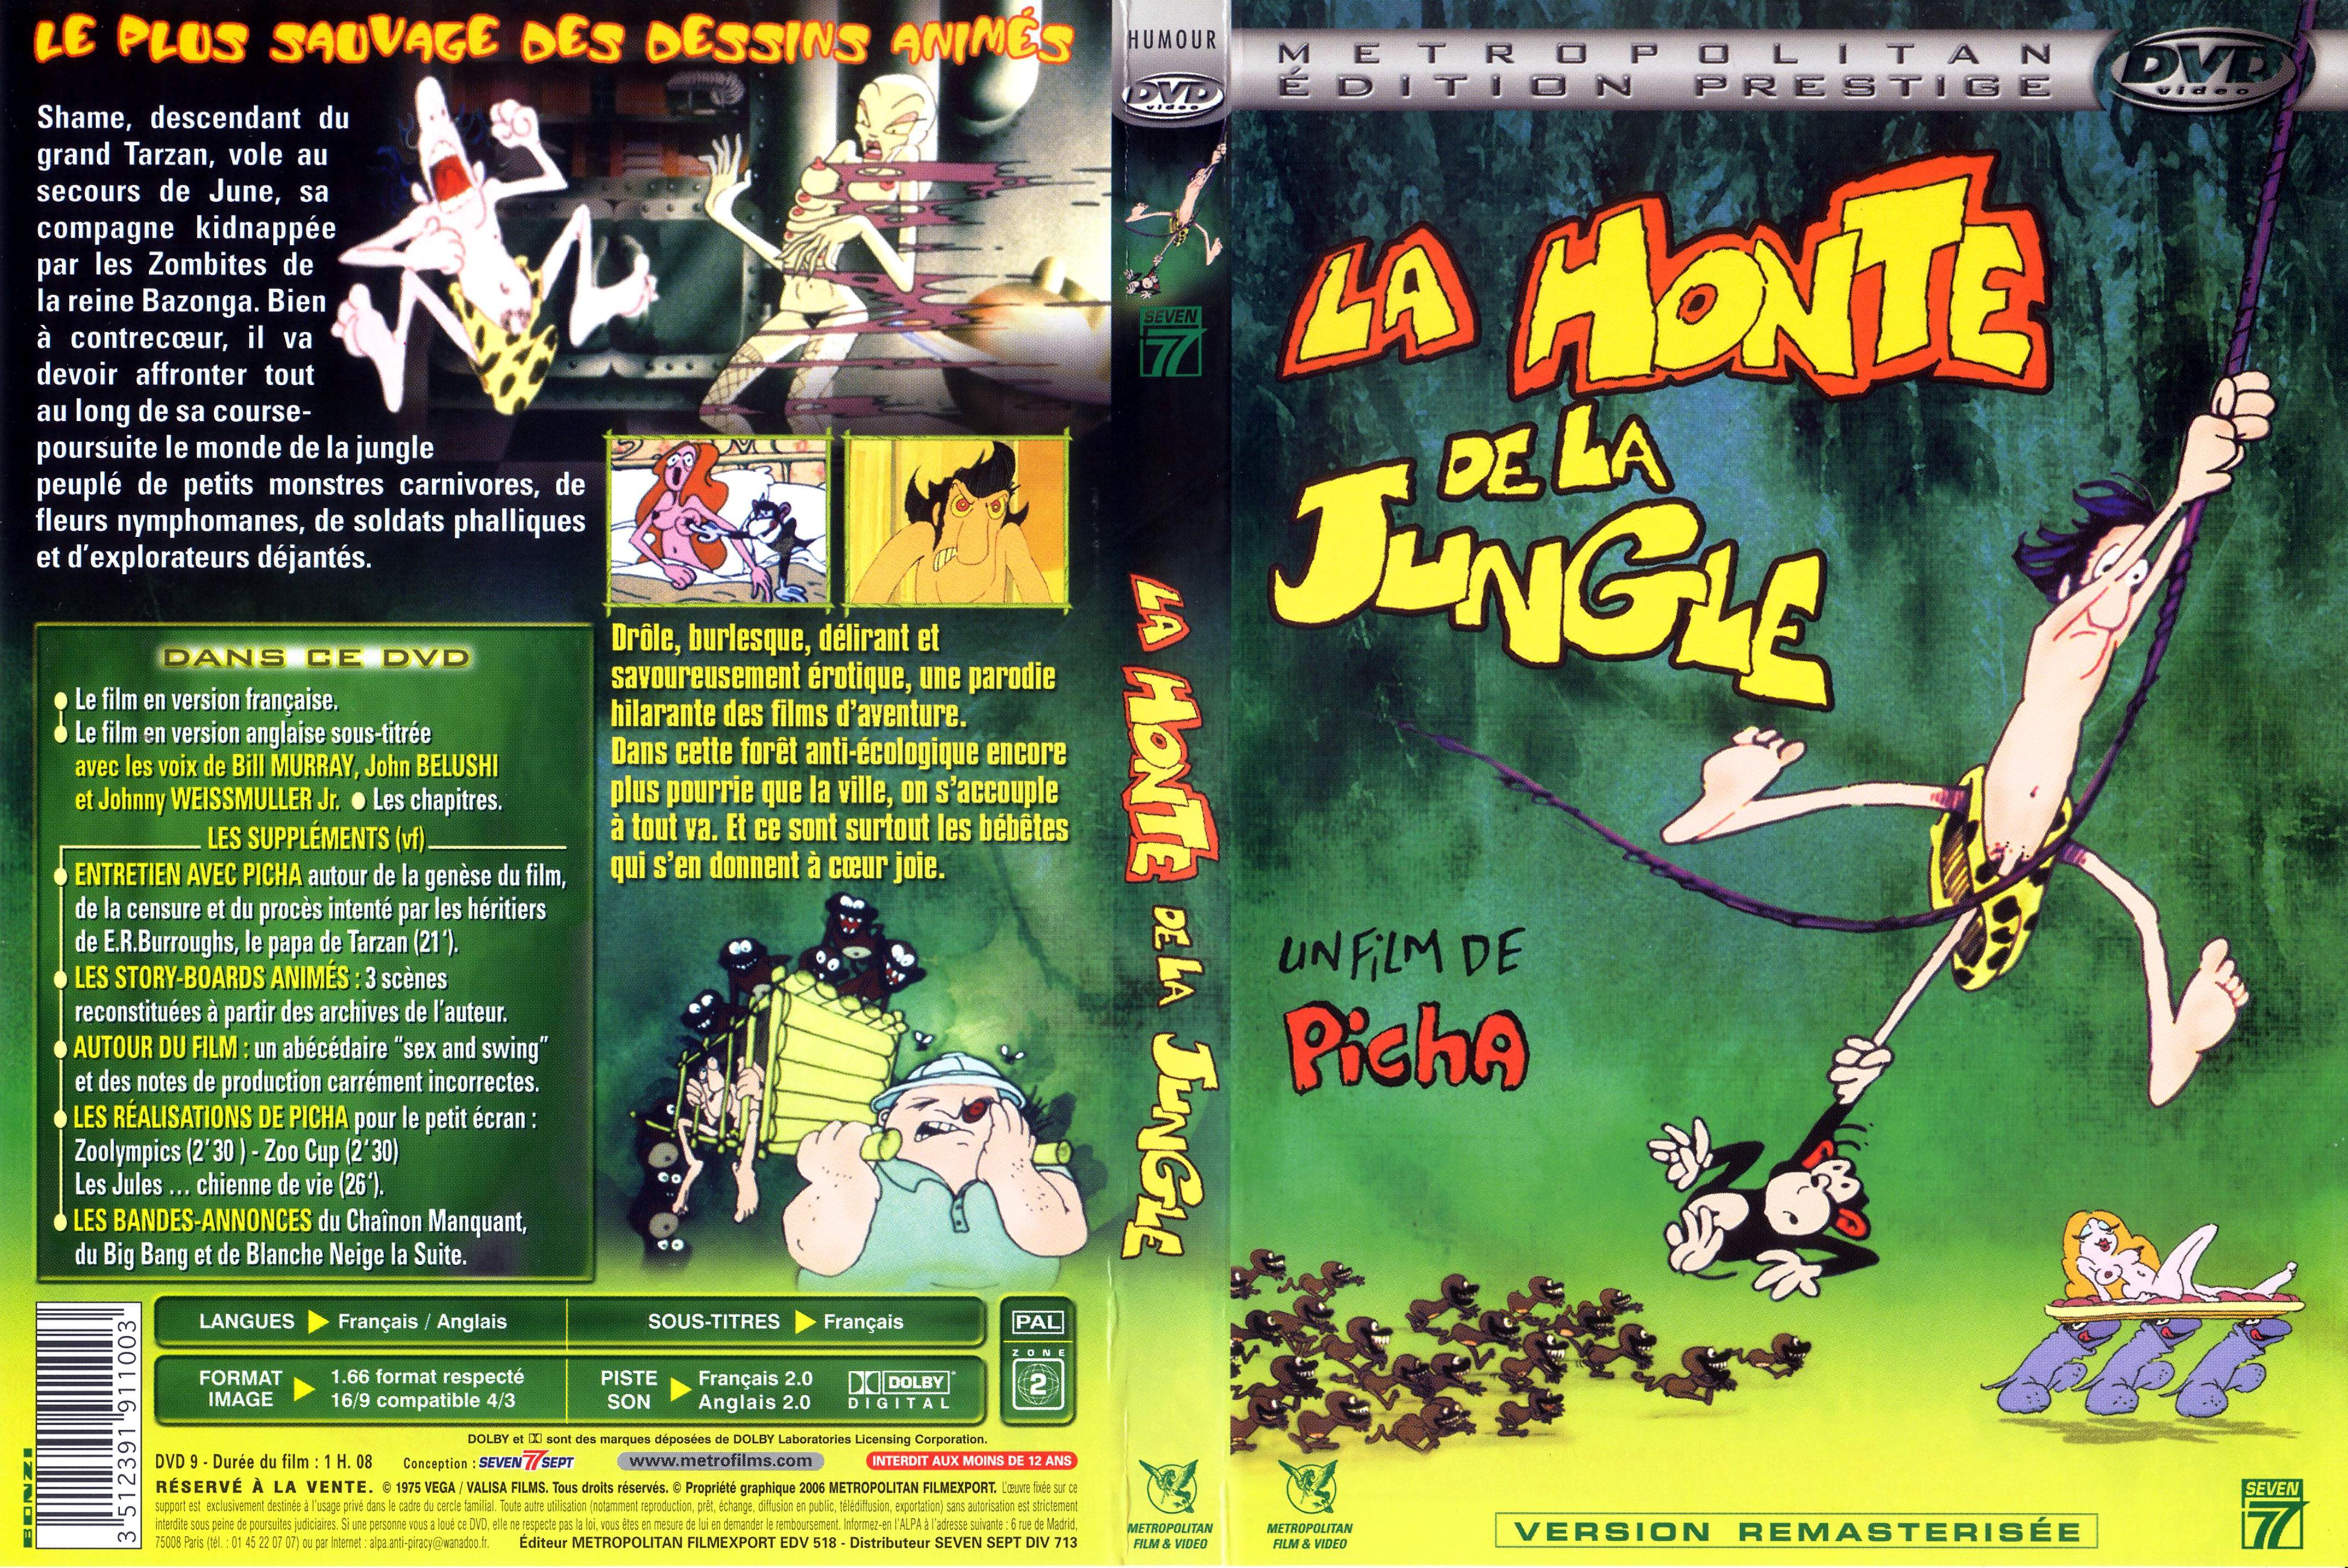 Jaquette DVD La honte de la jungle v2